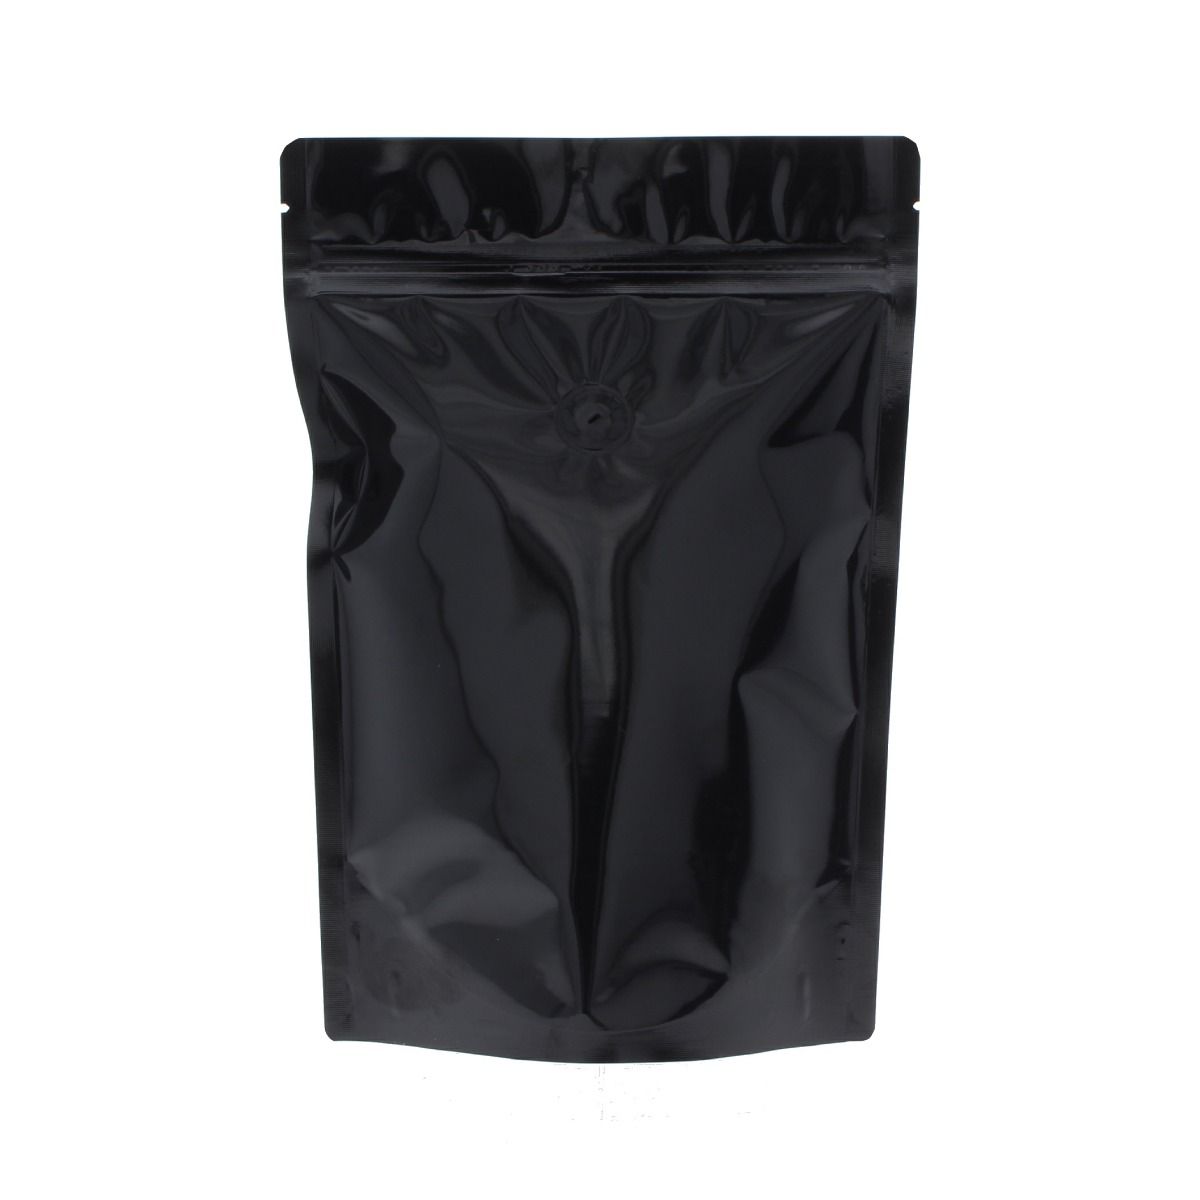 Coffee pouch - shiny black 